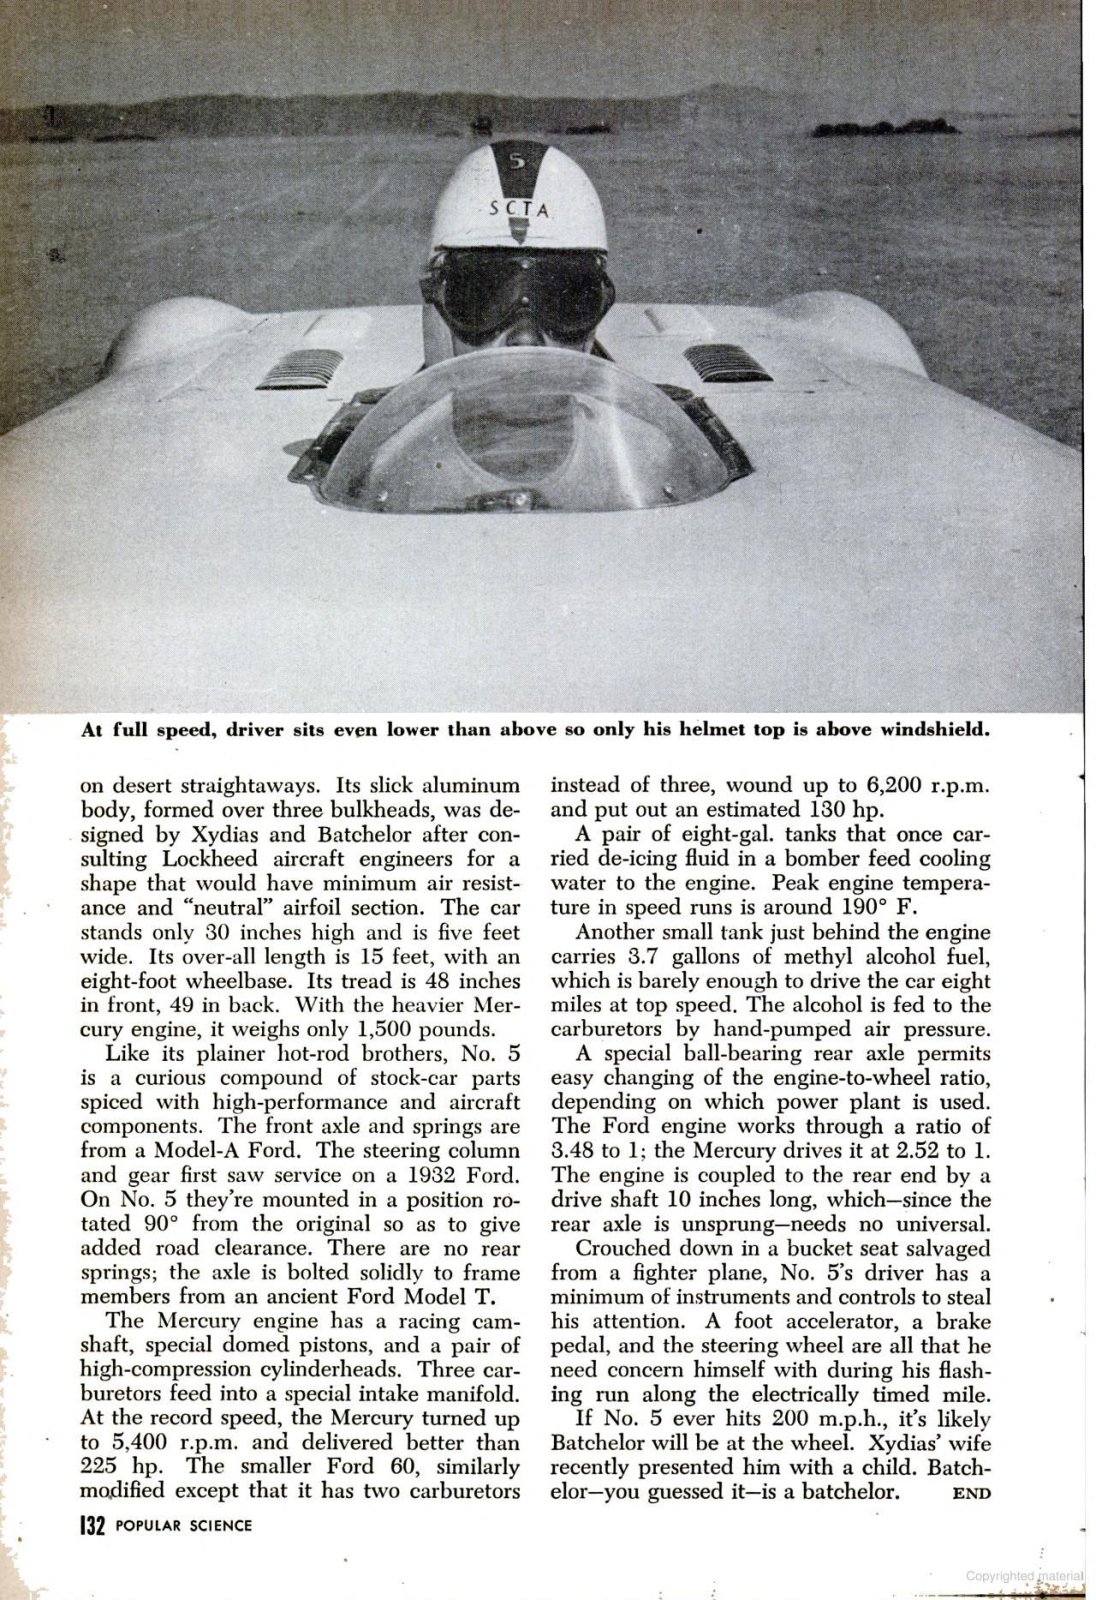 Popular Science - December 1949 - page 132.jpg